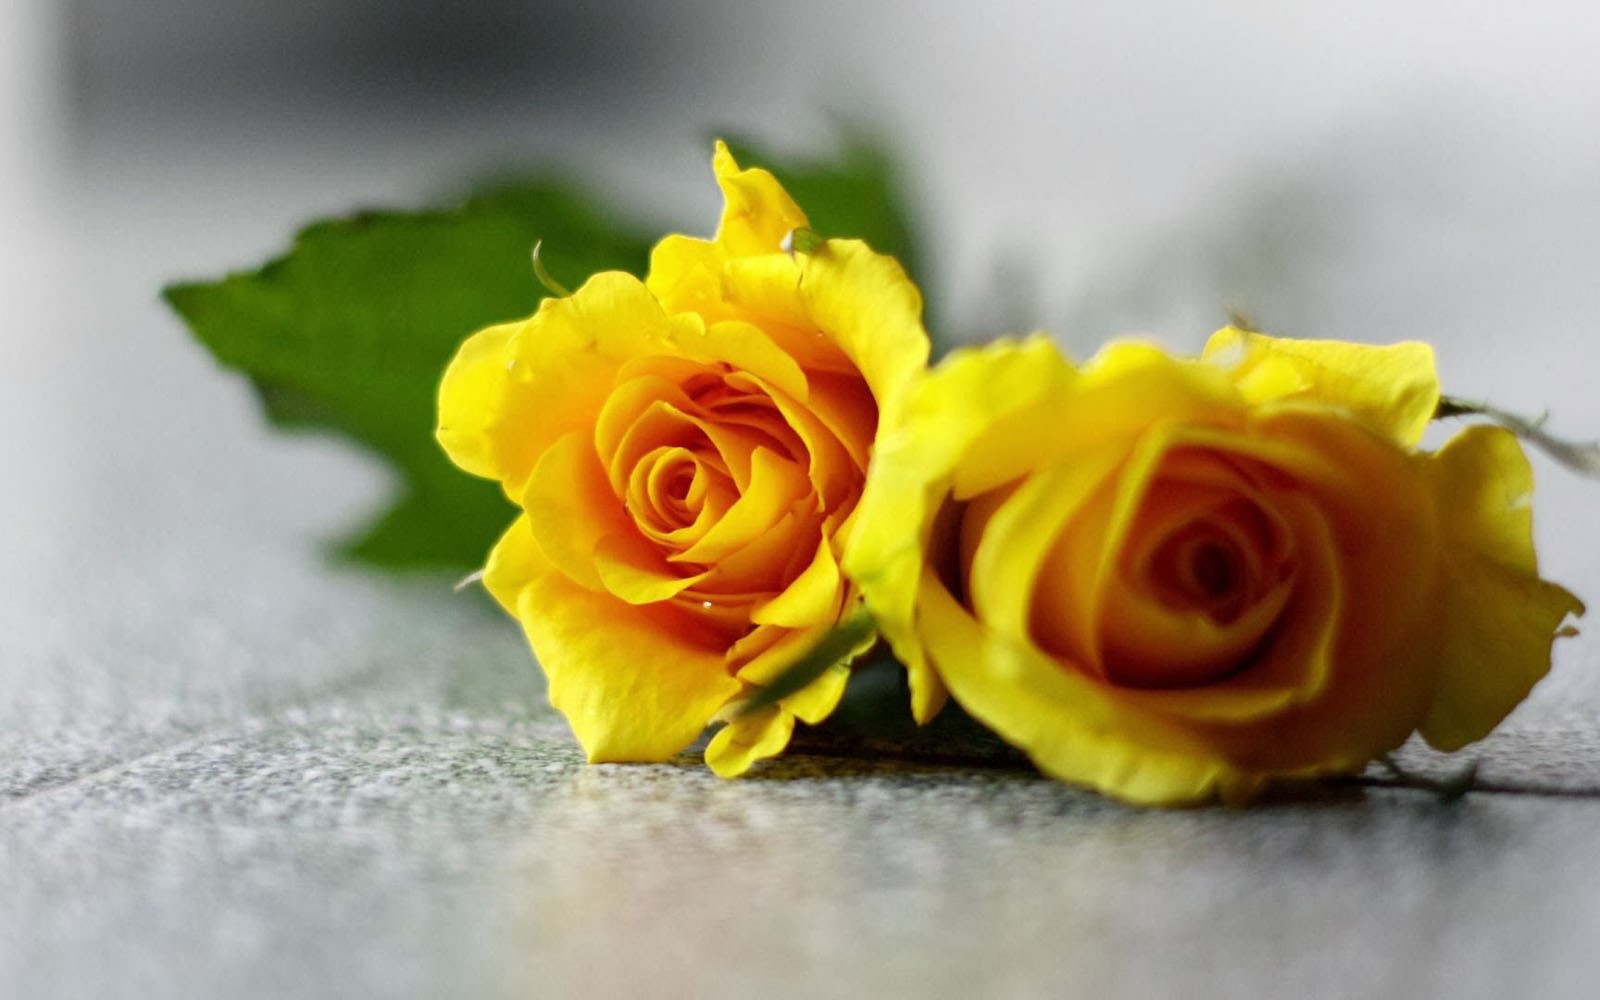 belle immagini di rose per carta da parati,fiore,giallo,rosa,rose da giardino,famiglia di rose